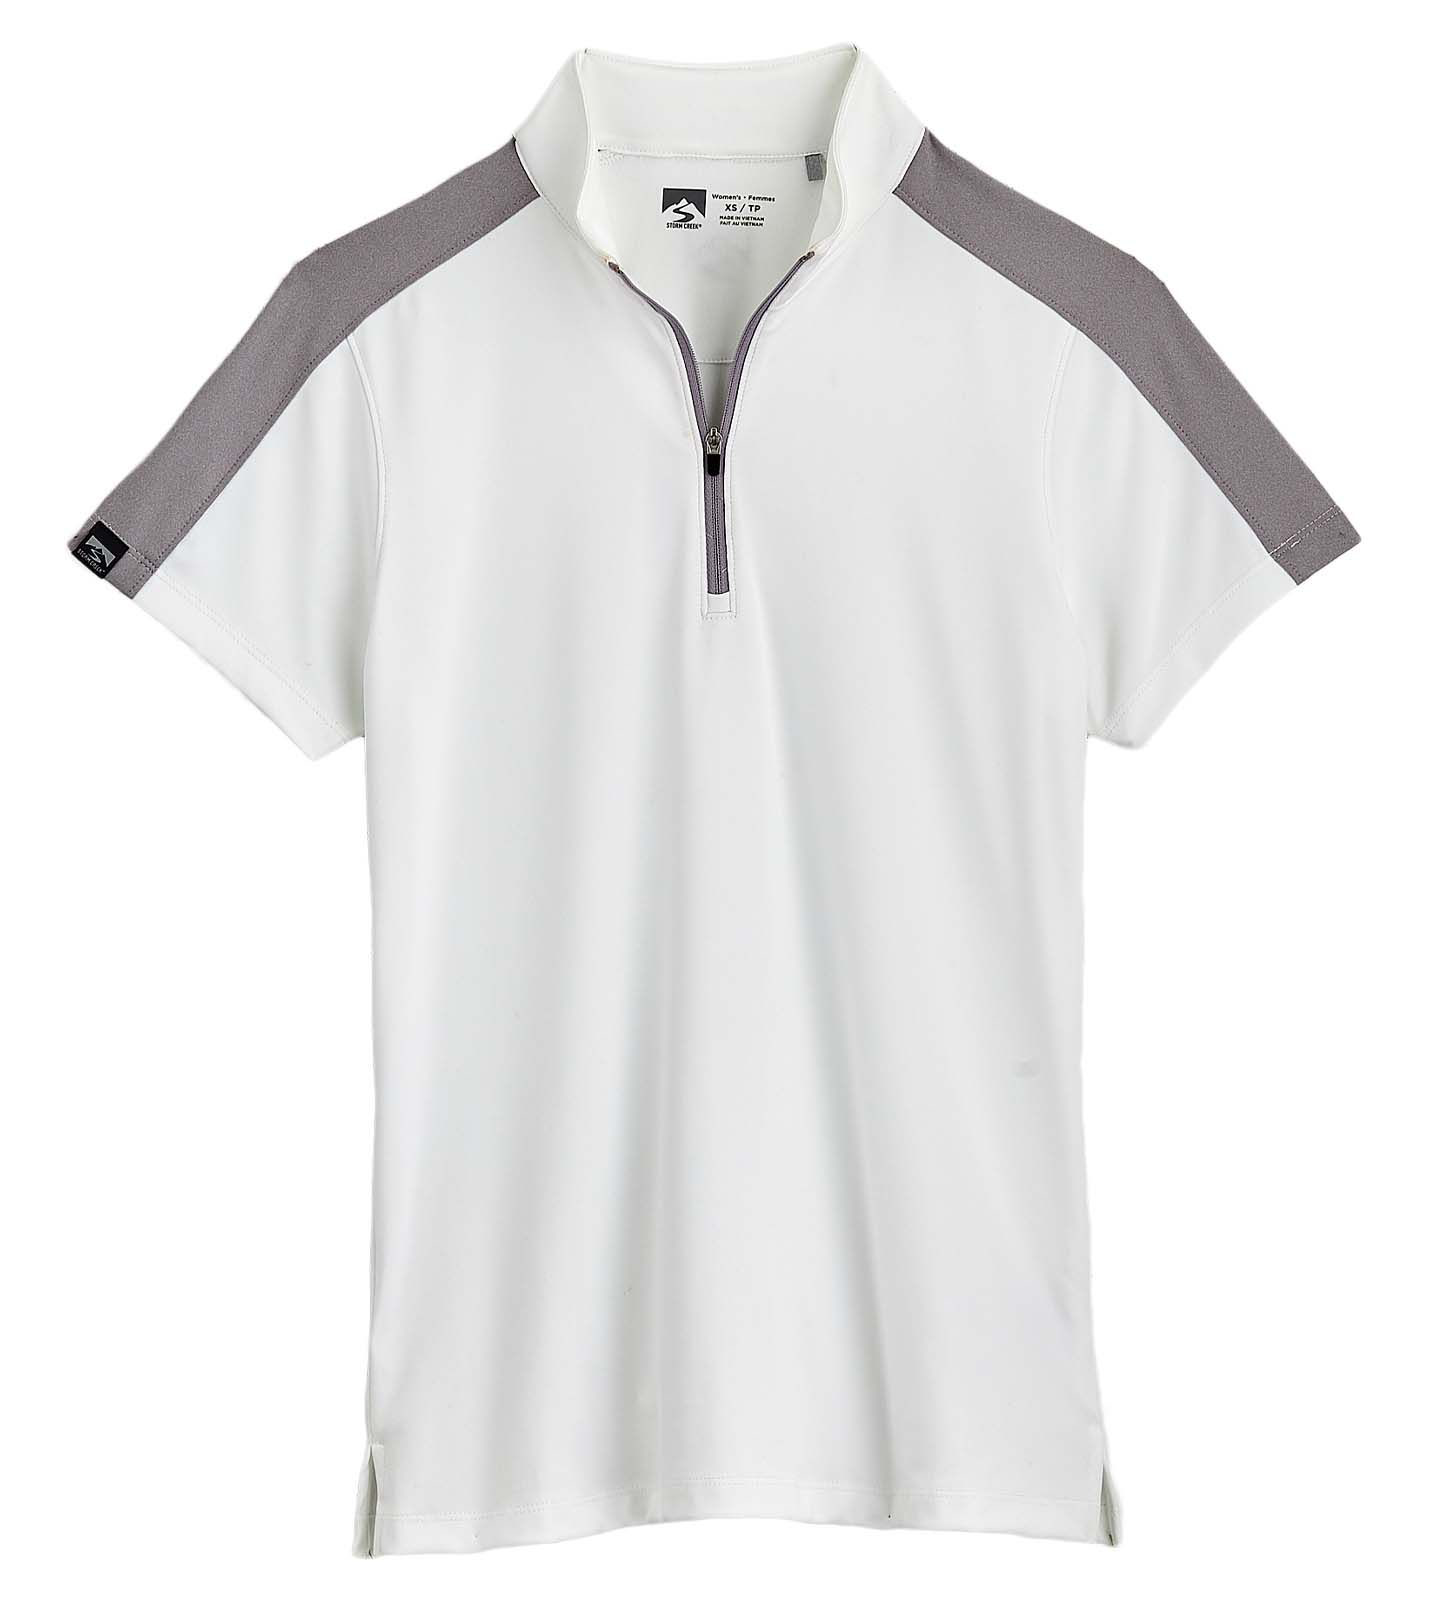 Storm Creek Activator Short-Sleeve Polo Shirt for Ladies - Dark Heather Gray/Black - White/Light Heather Gray - L